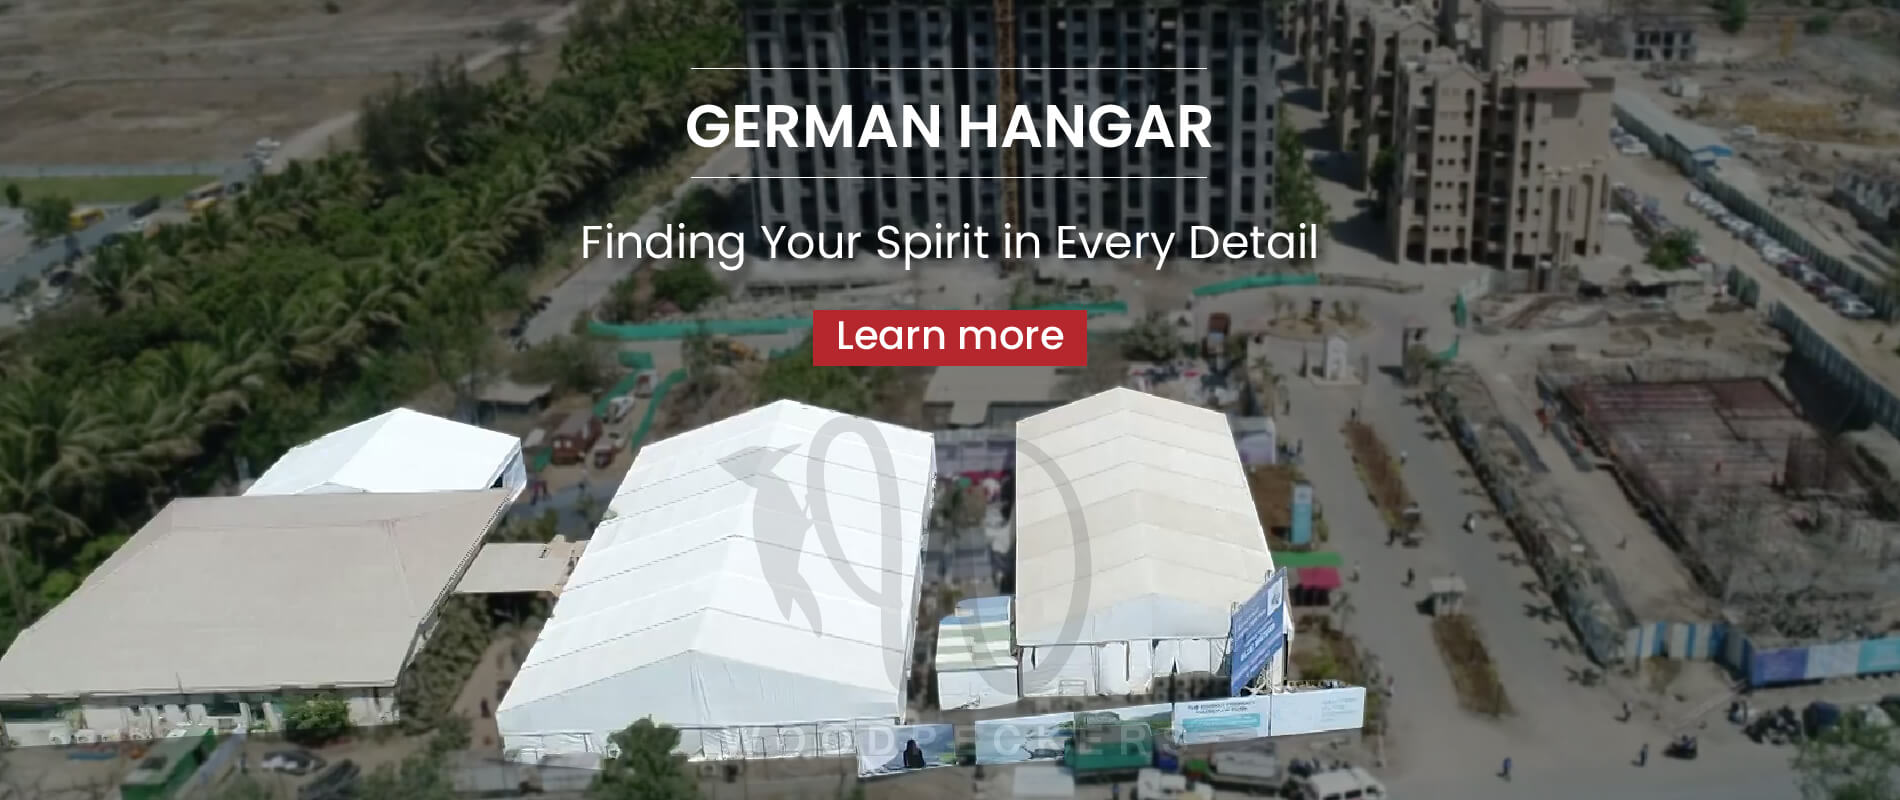 german hanger service provider